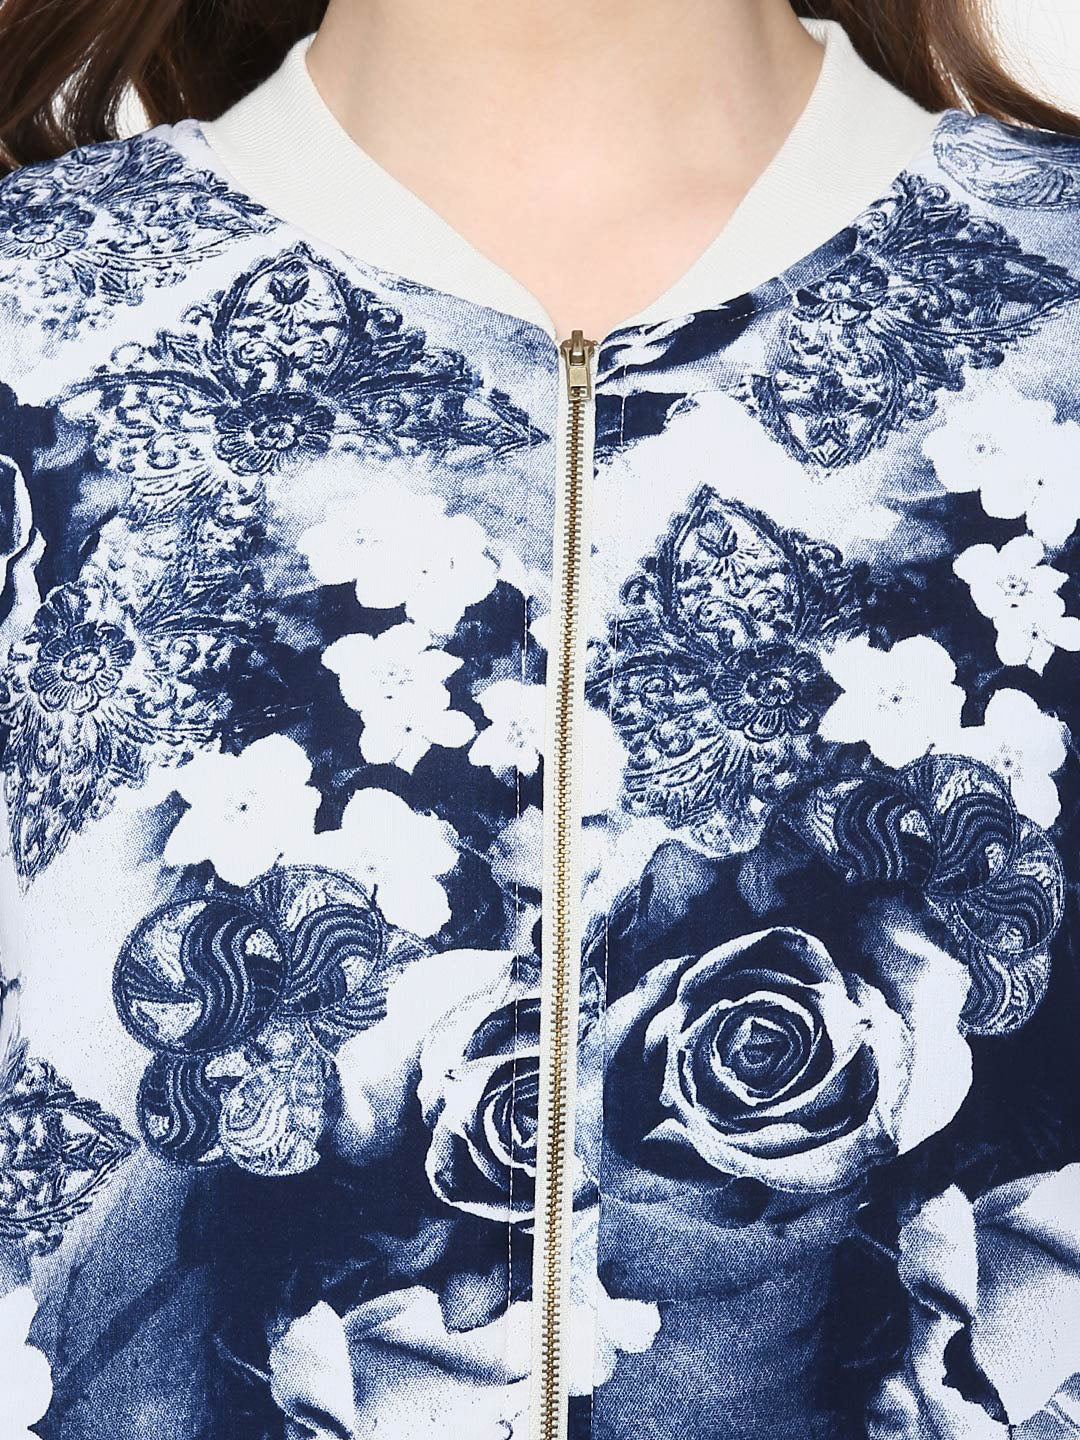 Women's Blue Floral Print Bomber Jacket